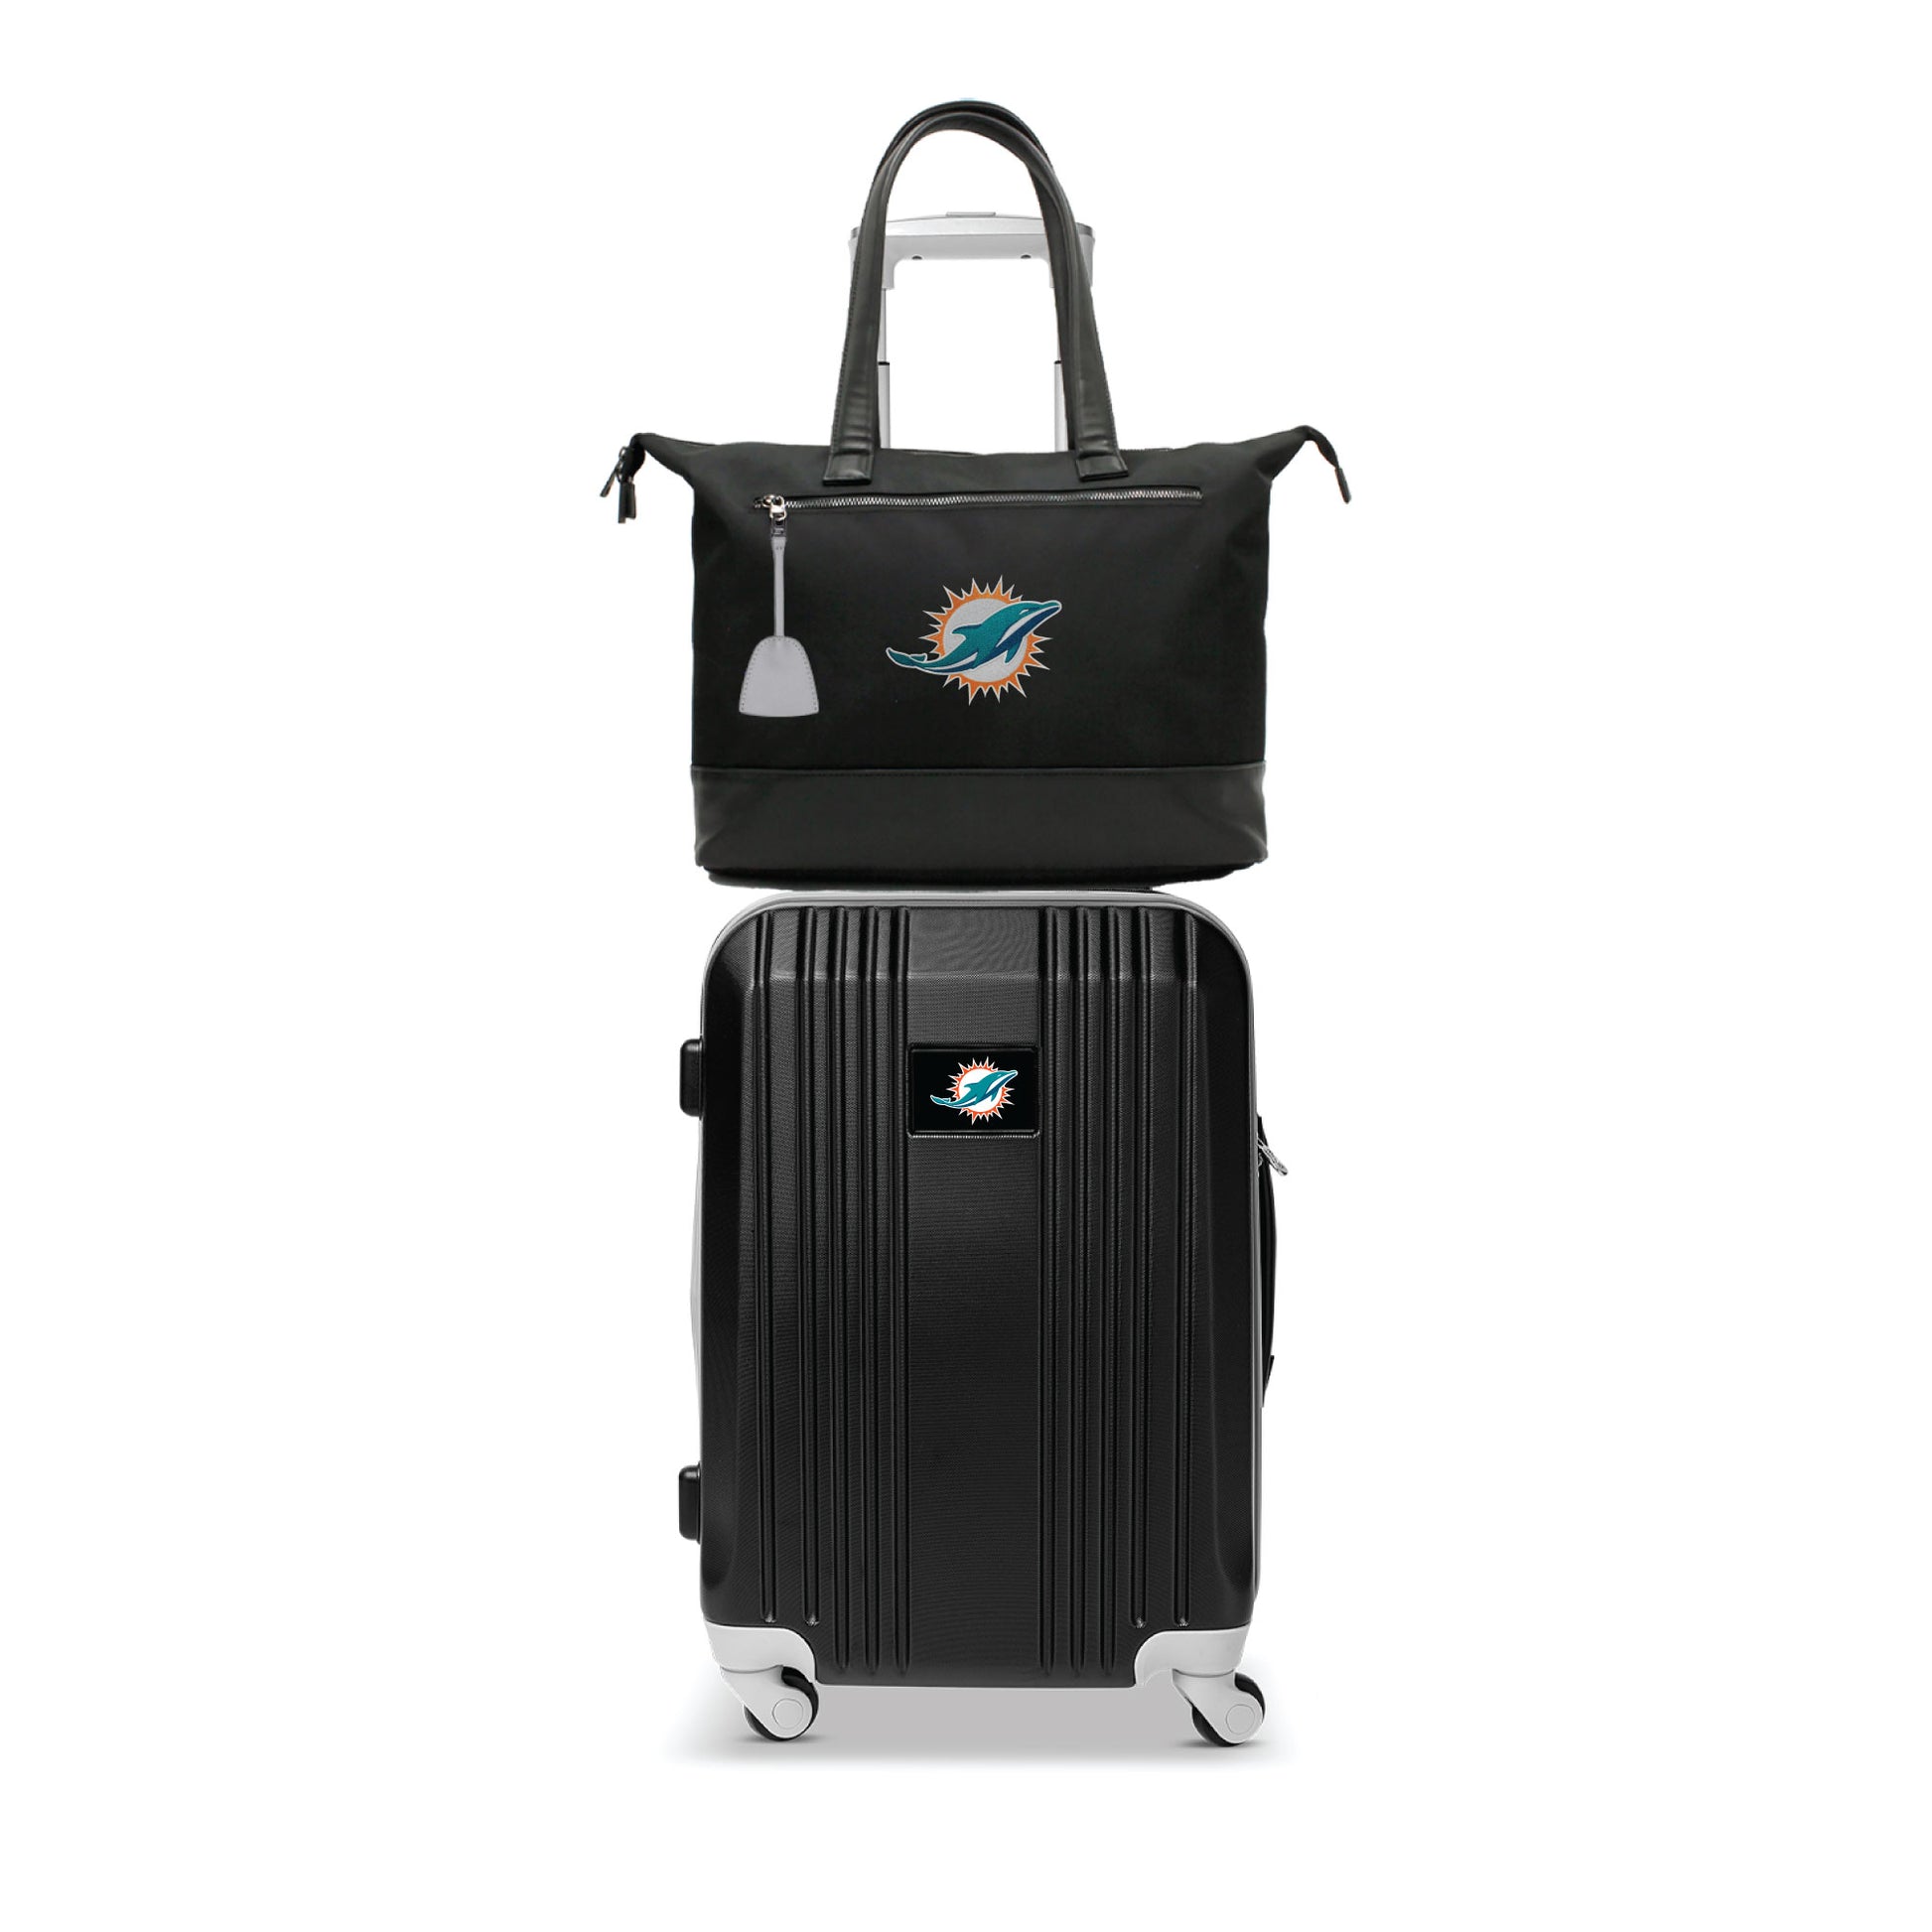 Miami Dolphins Premium Laptop Tote Bag and Luggage Set